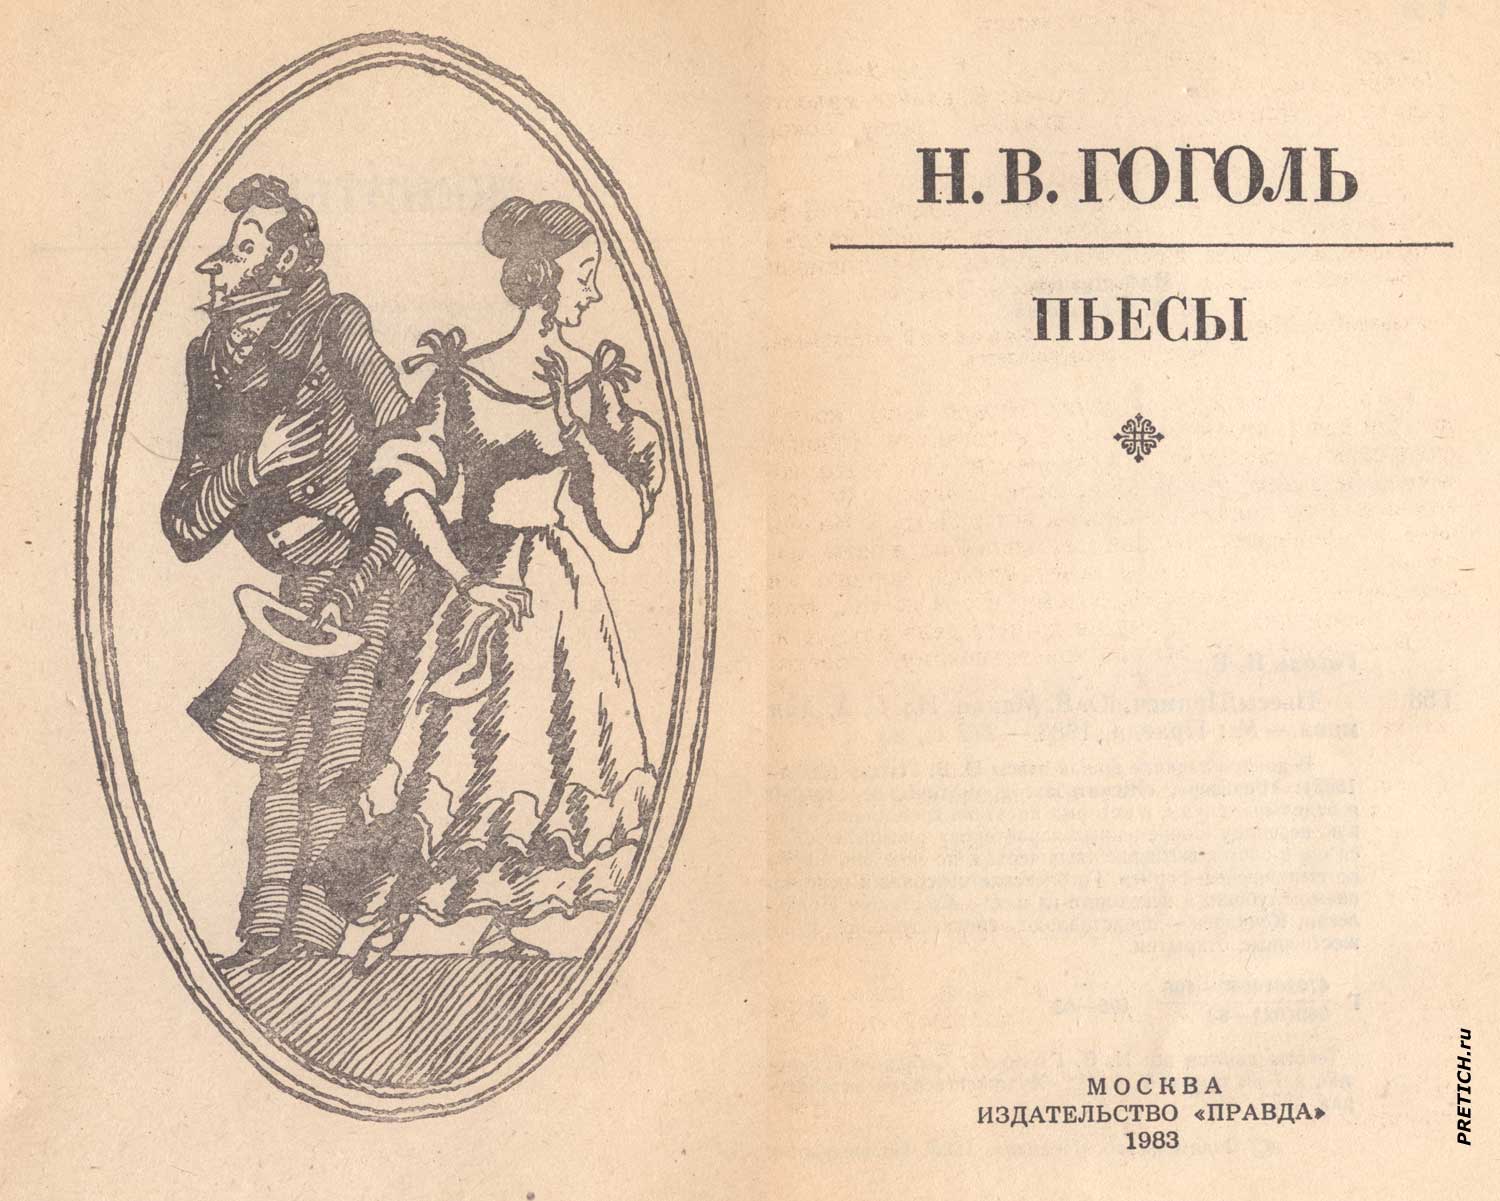 Иллюстрации художника С.А. Алимова советские книги